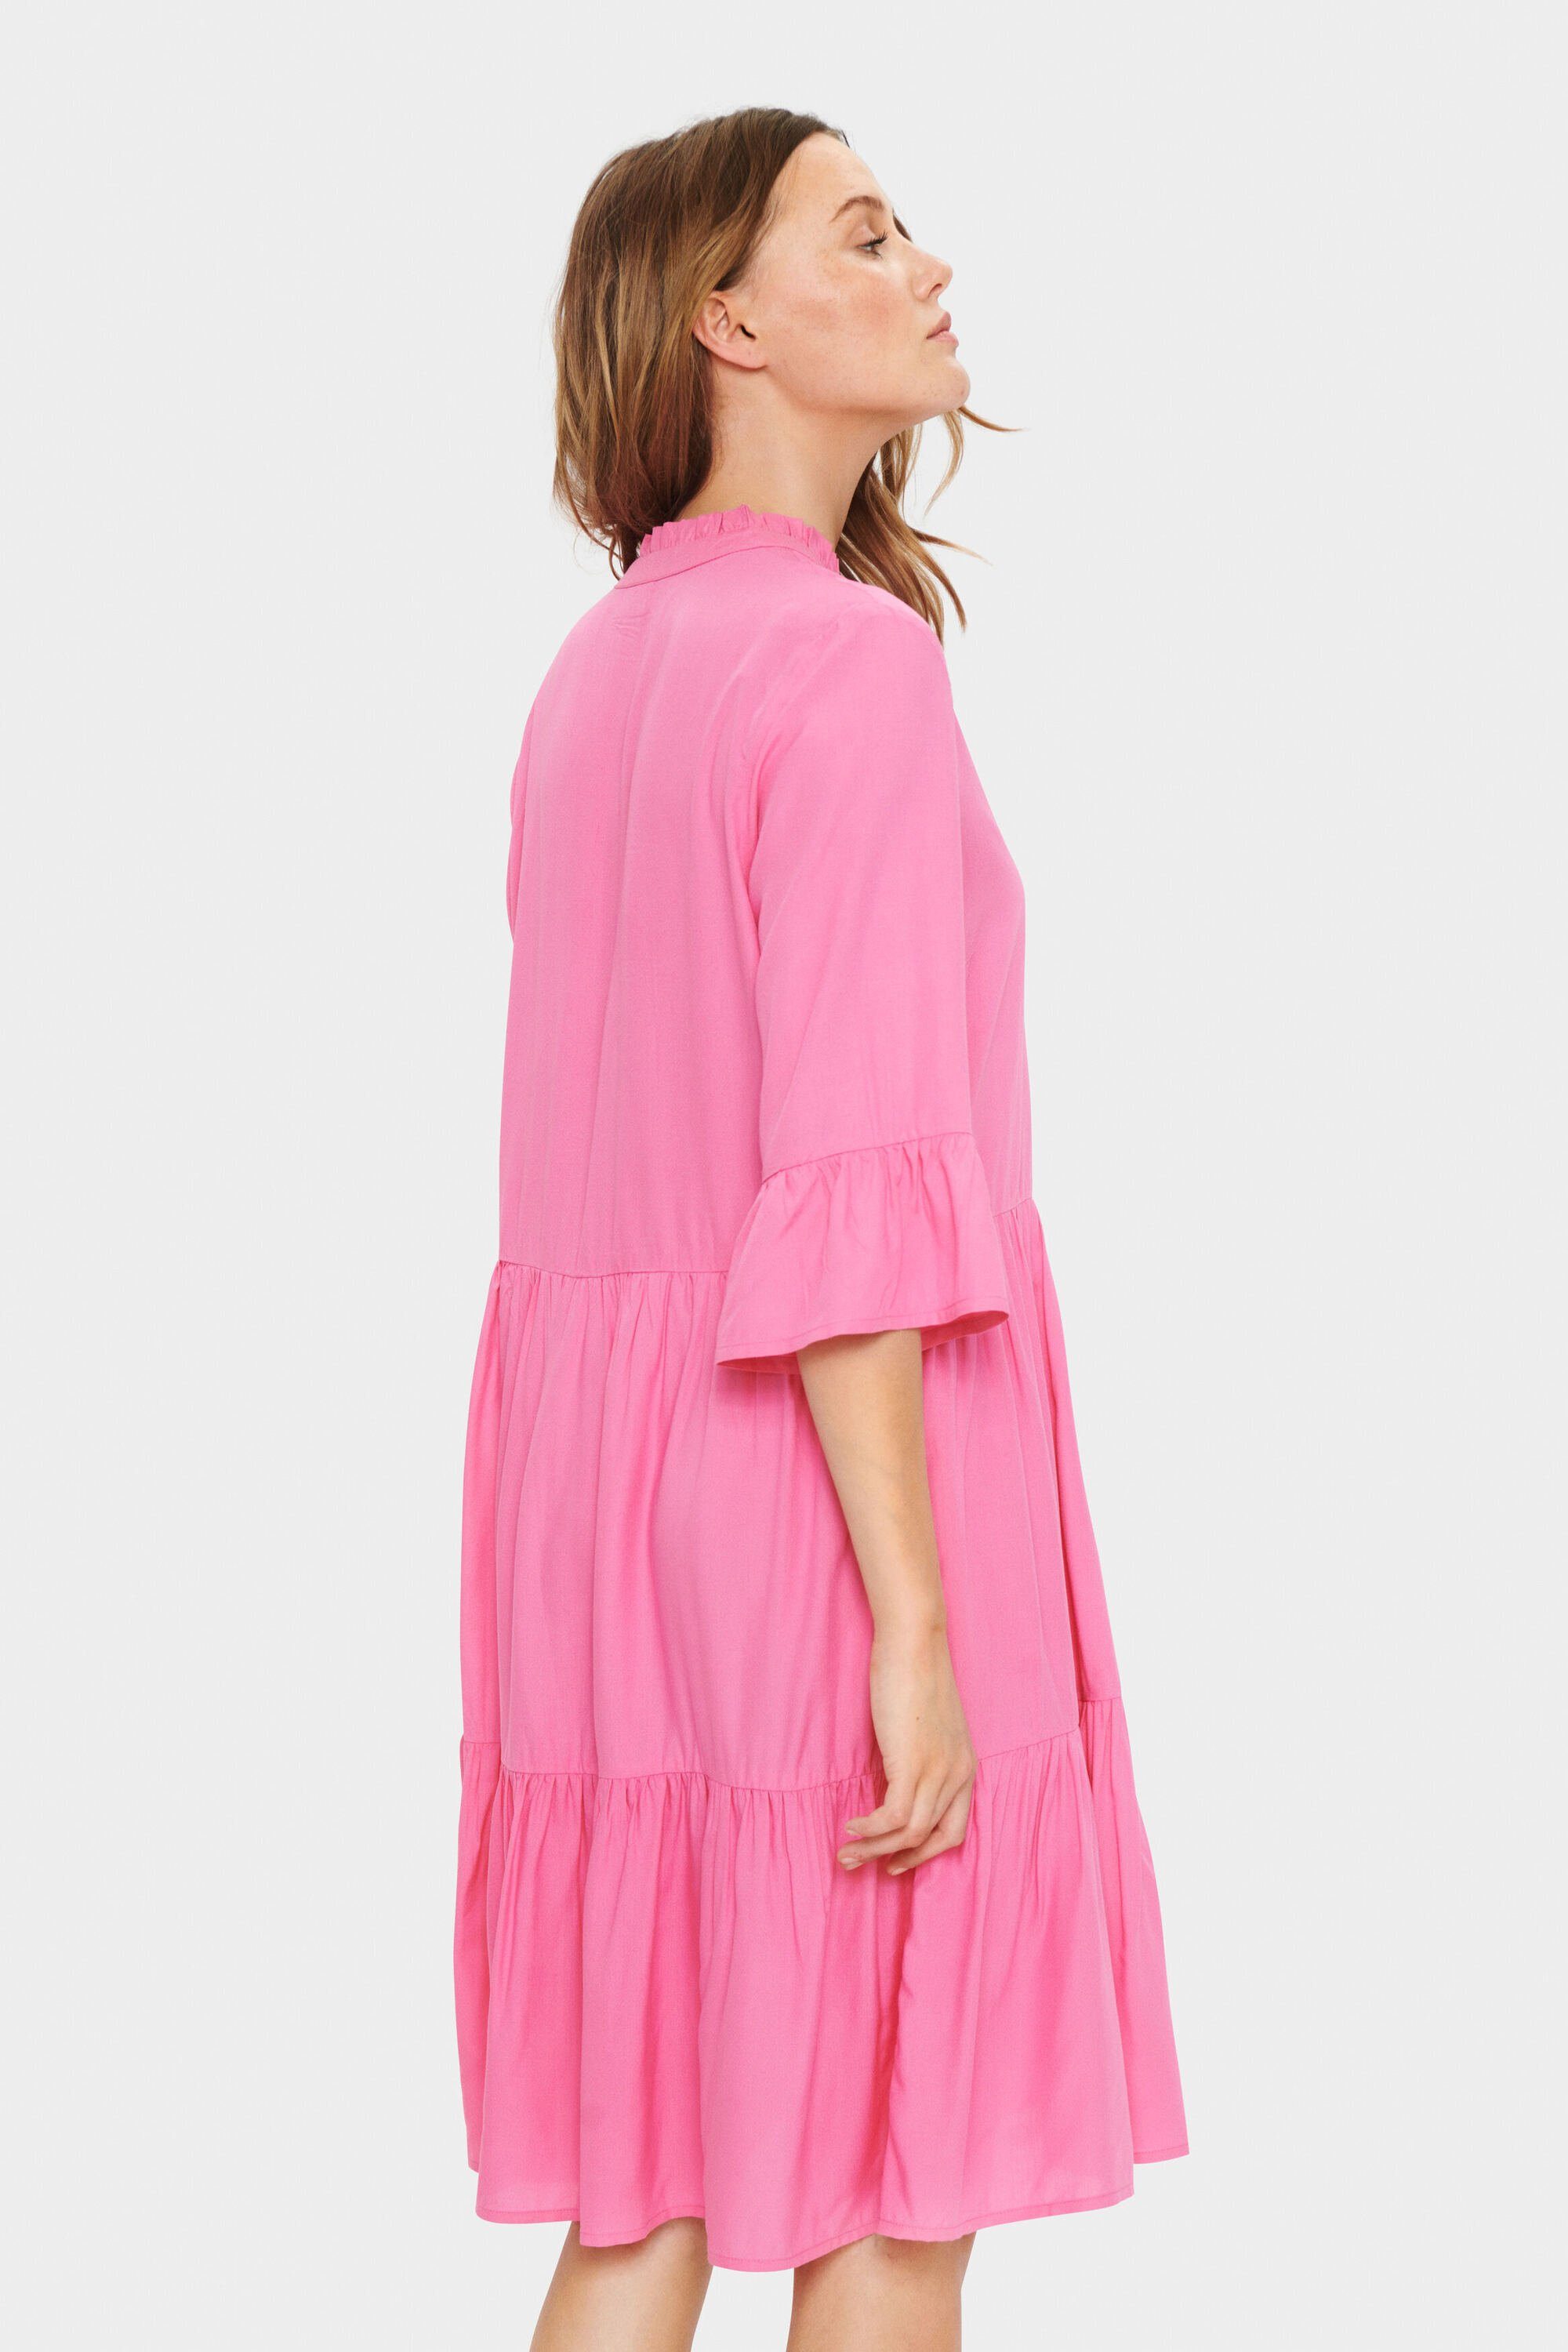 Saint Tropez Jerseykleid Kleid EdaSZ Pink Azalea